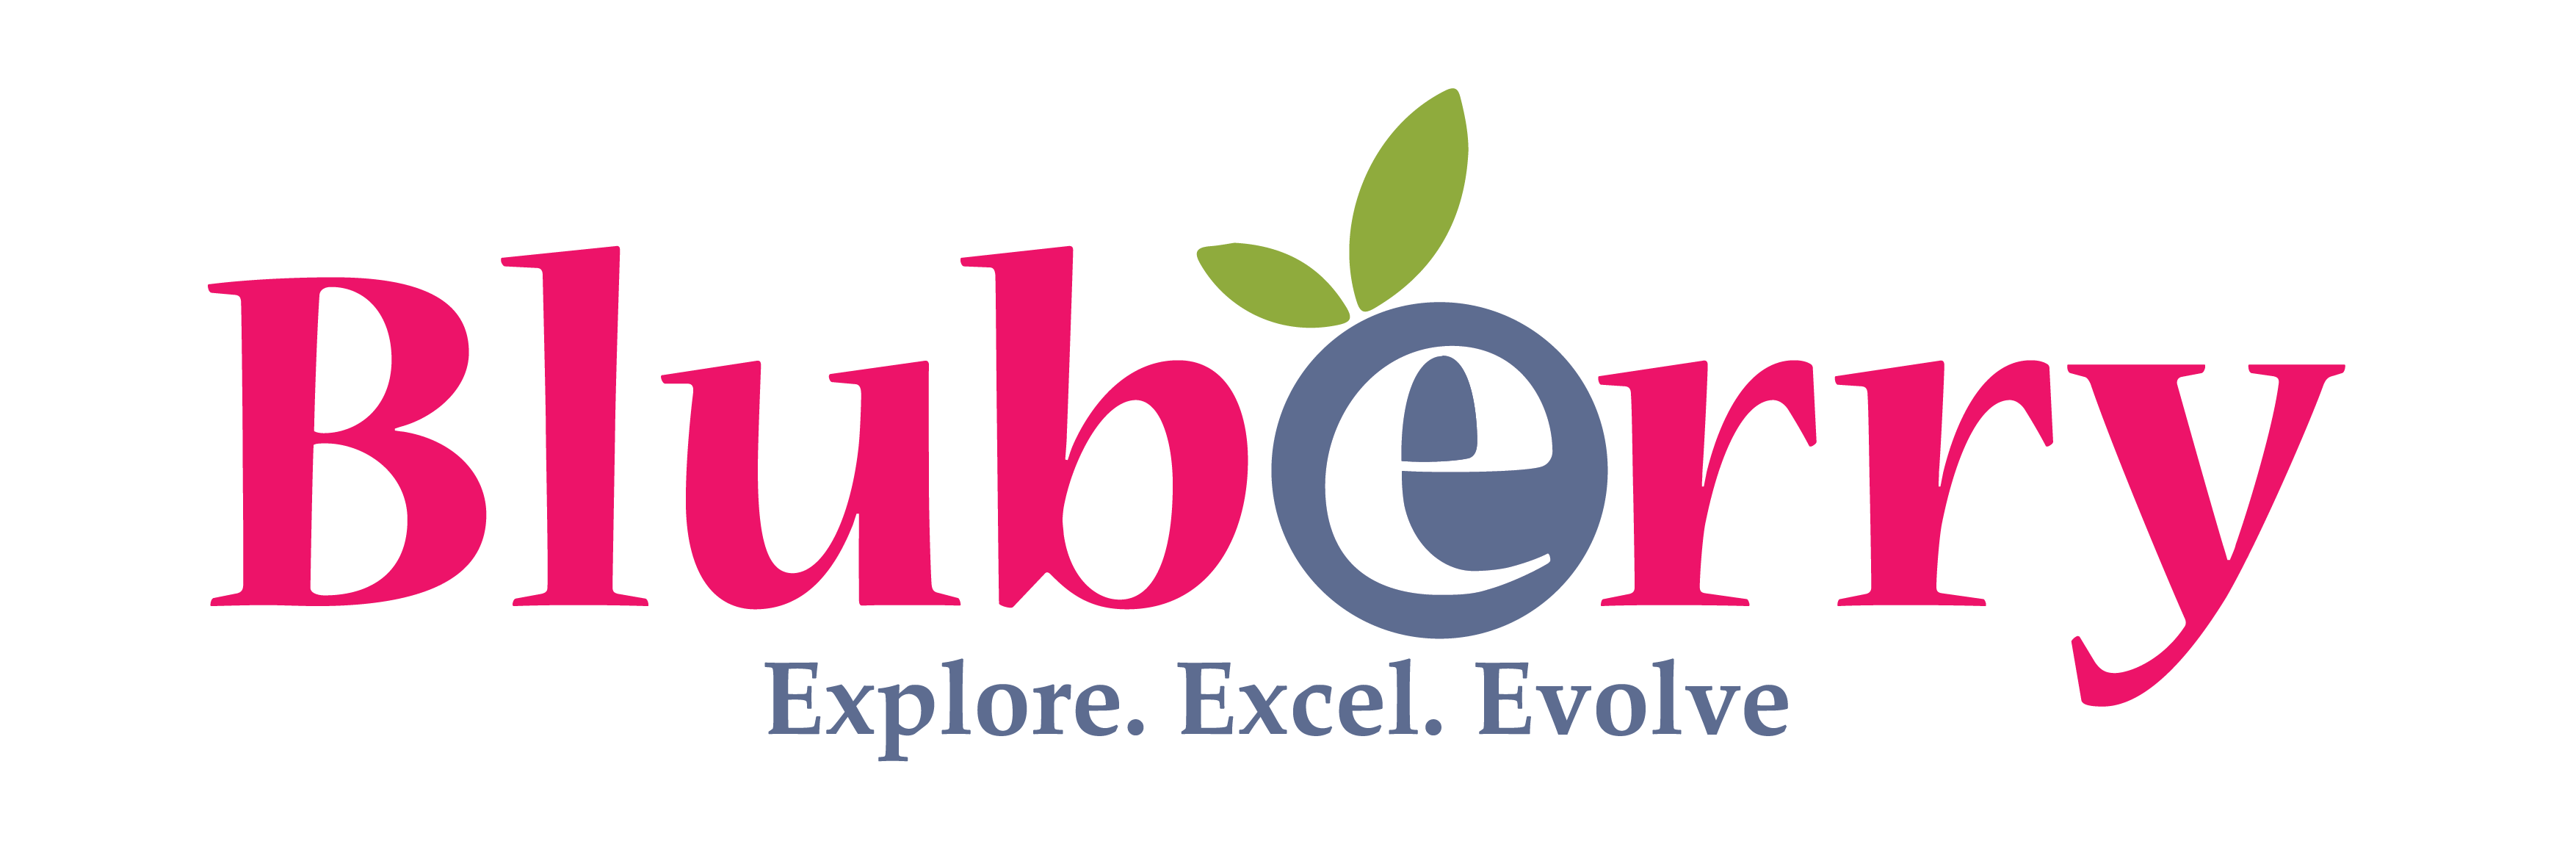 Bluberry logo-01 - Copy